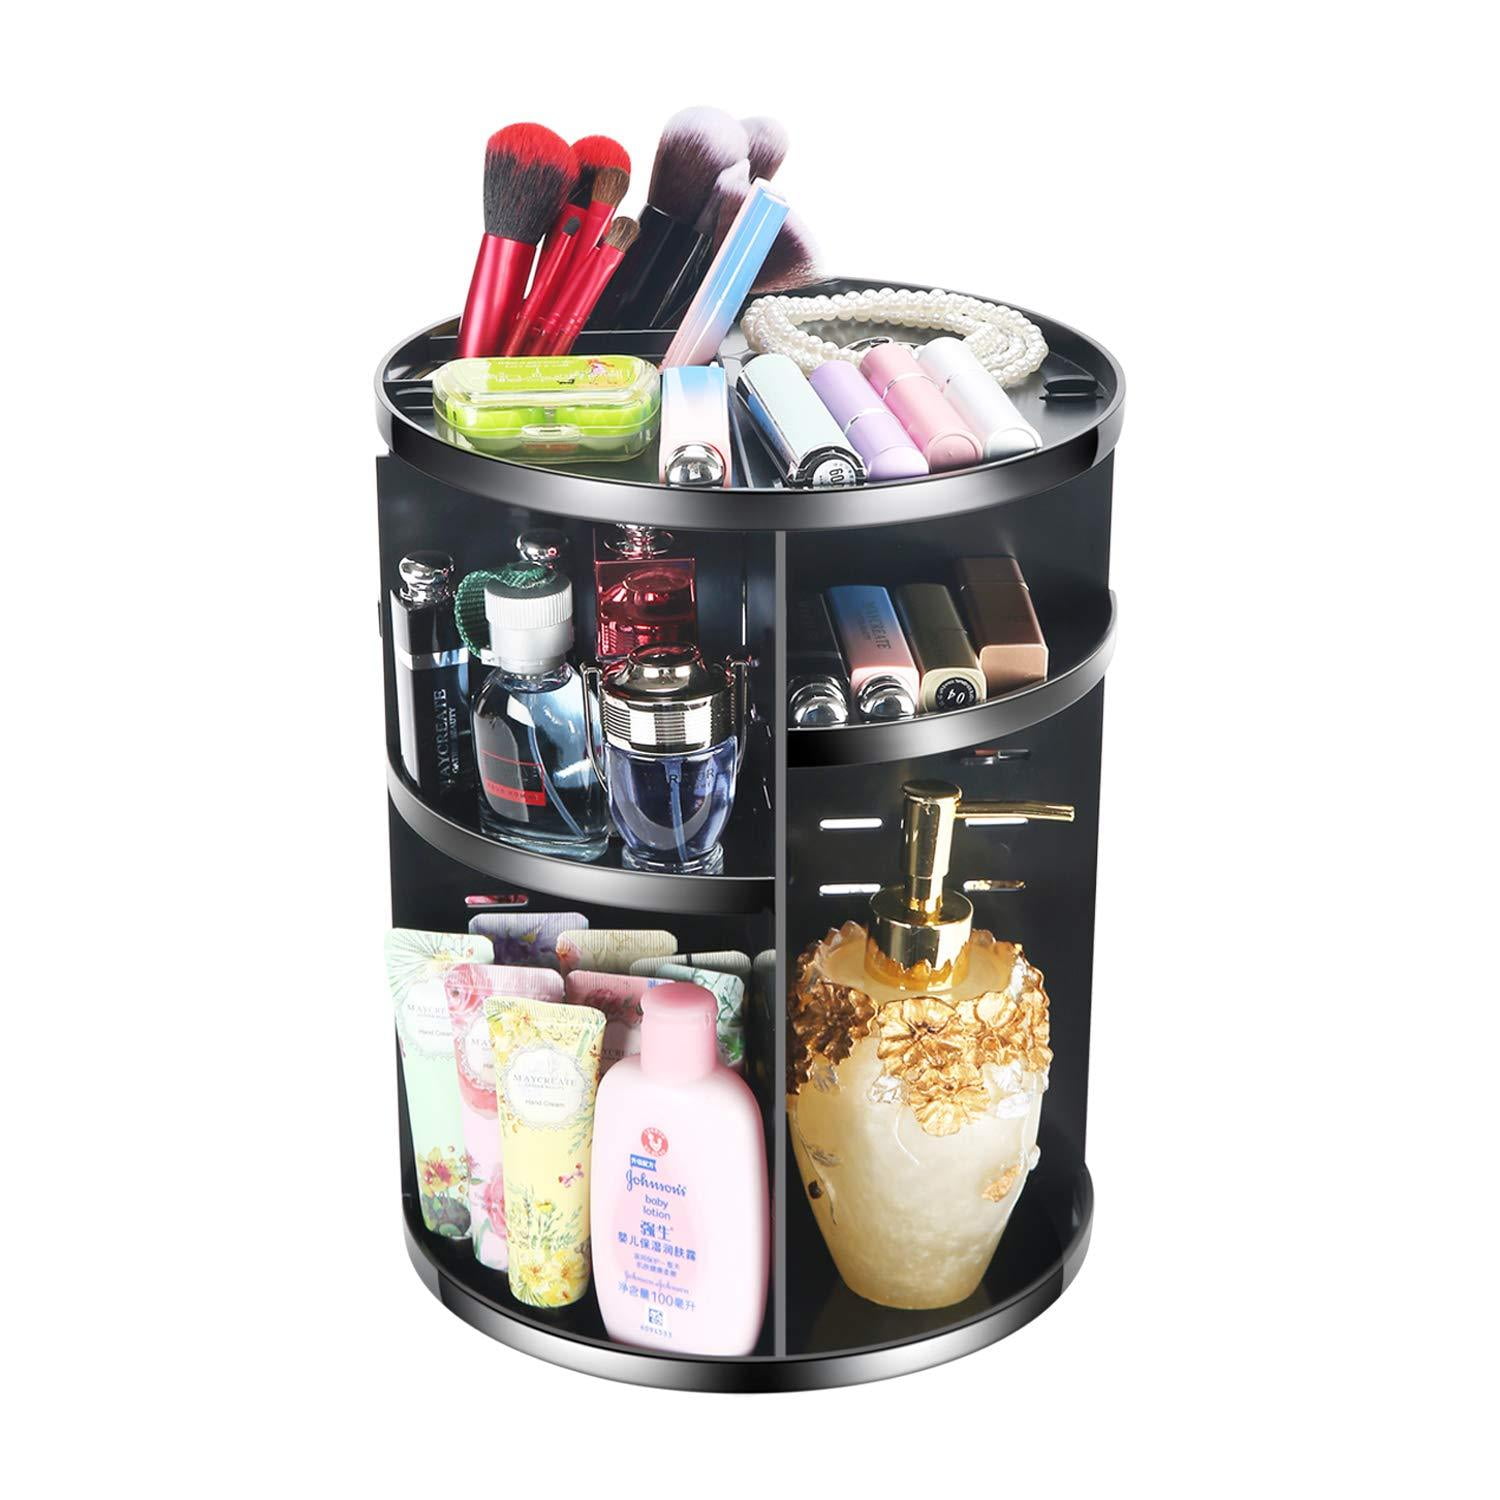 360 Rotating Makeup Organizer, DIY Adjustable Makeup Carousel Spinning  Holder Storage Rack, Large Capacity Make up Caddy Shelf Cosmetics Organizer  Box, Best for Countertop